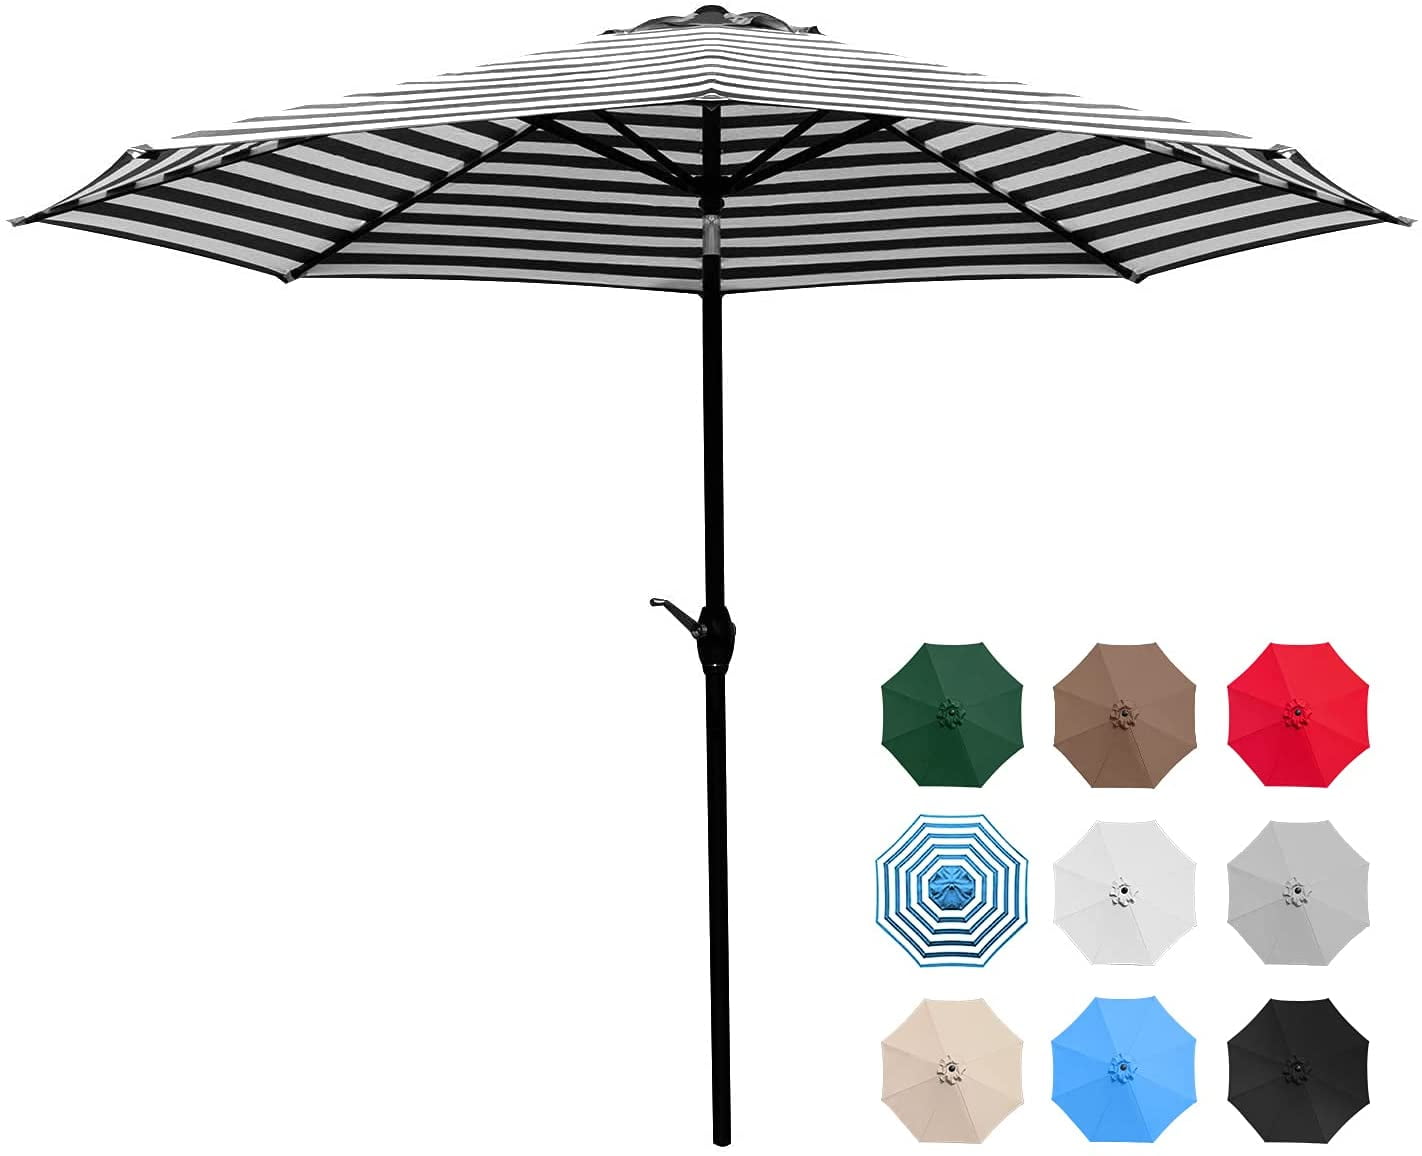 Devoko 9FT Patio Umbrella Outdoor Table Umbrella with 8 Sturdy Ribs, Black/White